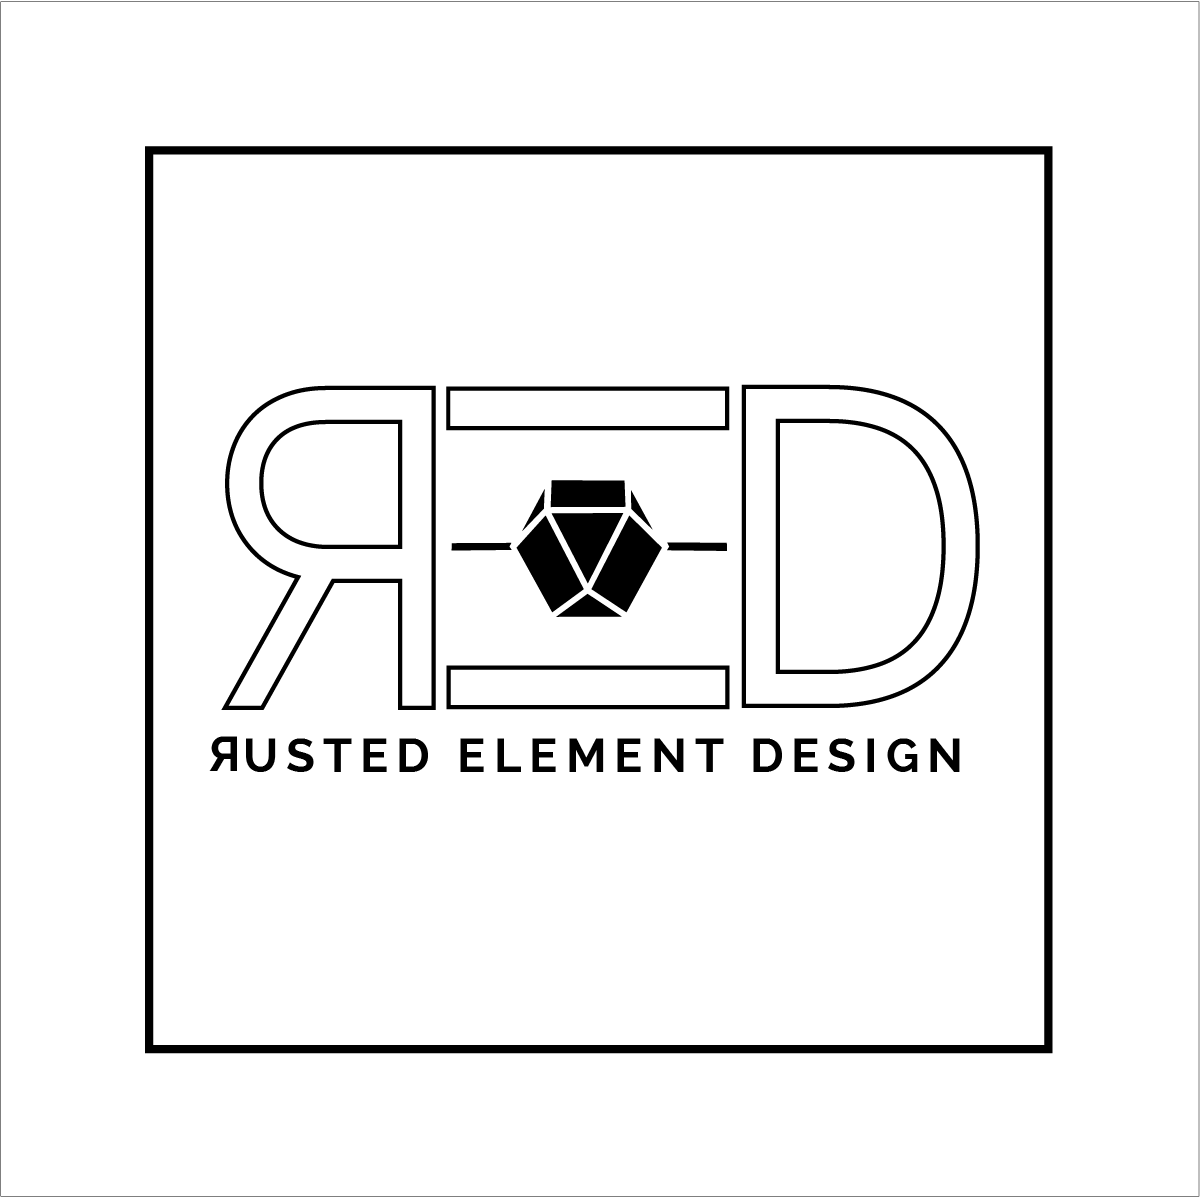 Rusted Element Design Logo